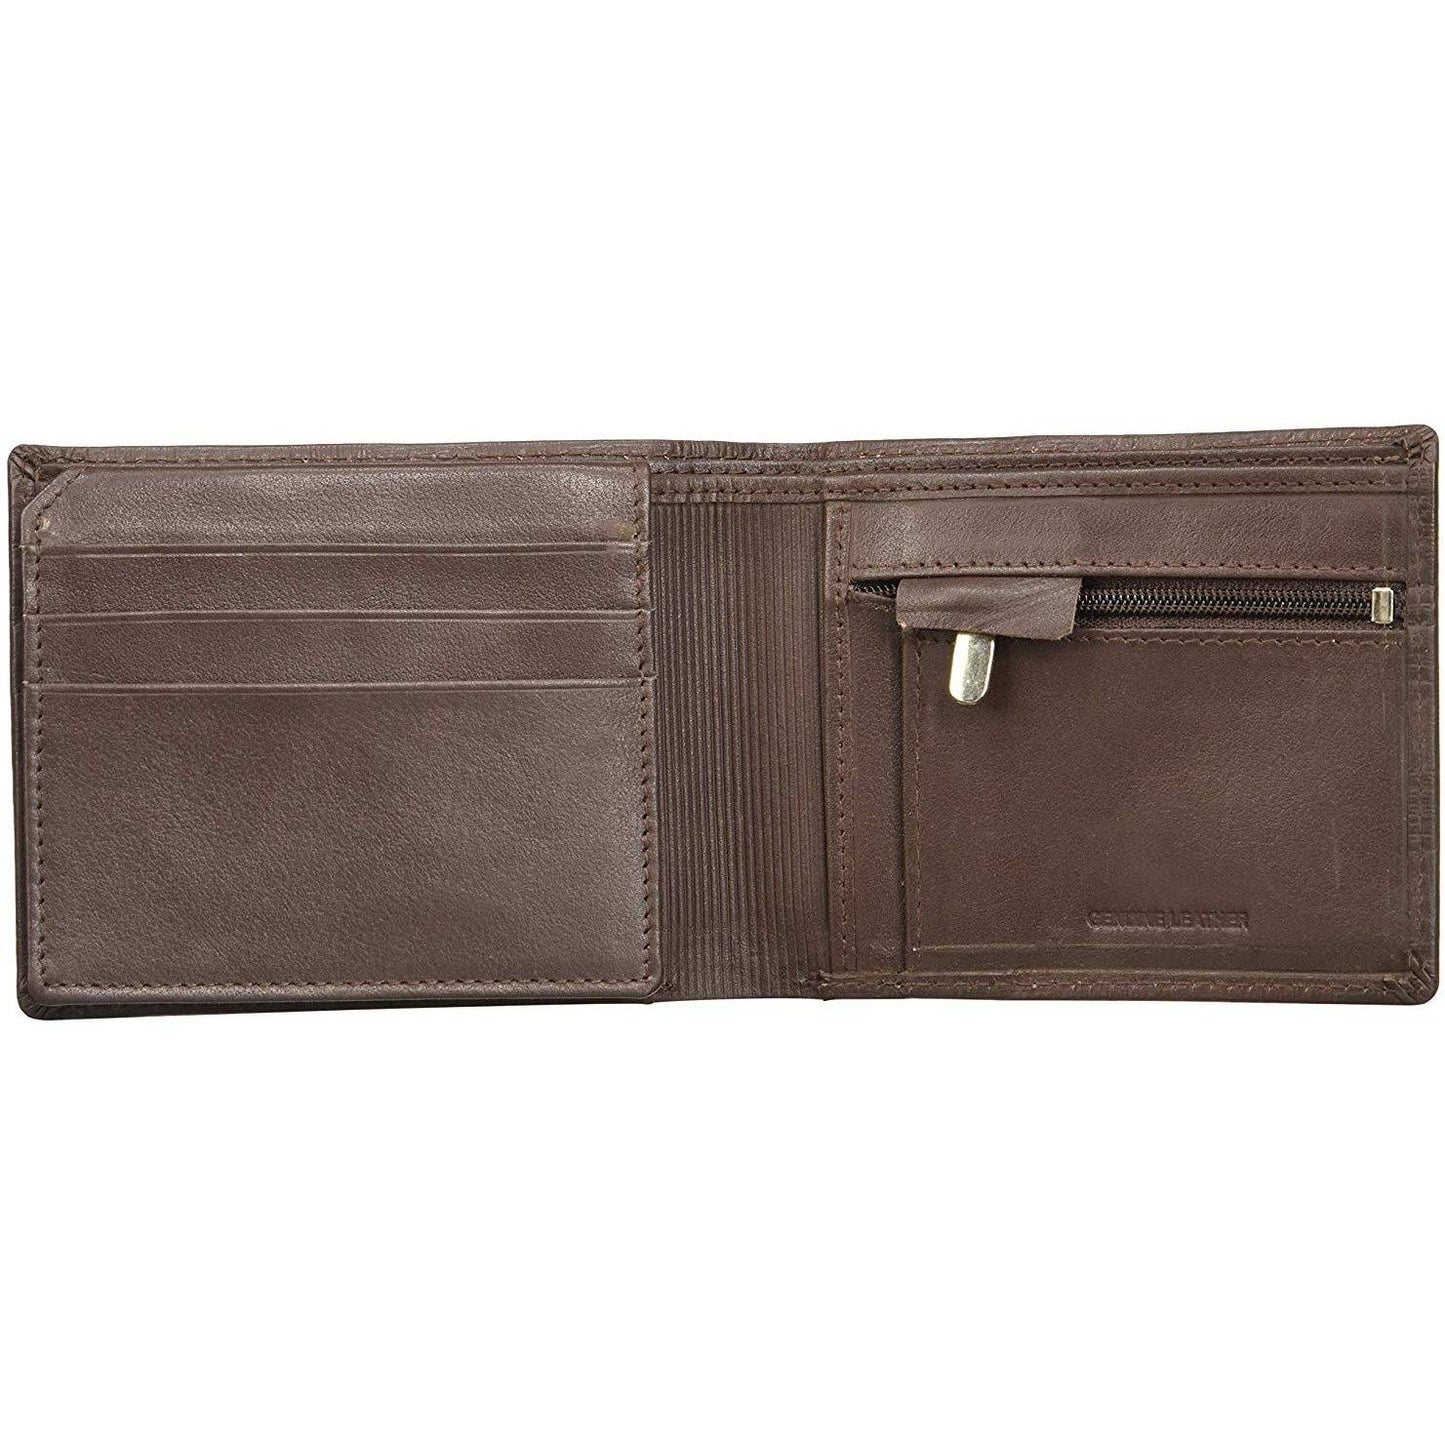 Brown Colour Bi-Fold Italian Leather Slim Wallet ( 6 Card Slot + 2 Hidden Compartment + 1 ID Slot + Coin Pocket + Cash Compartment )